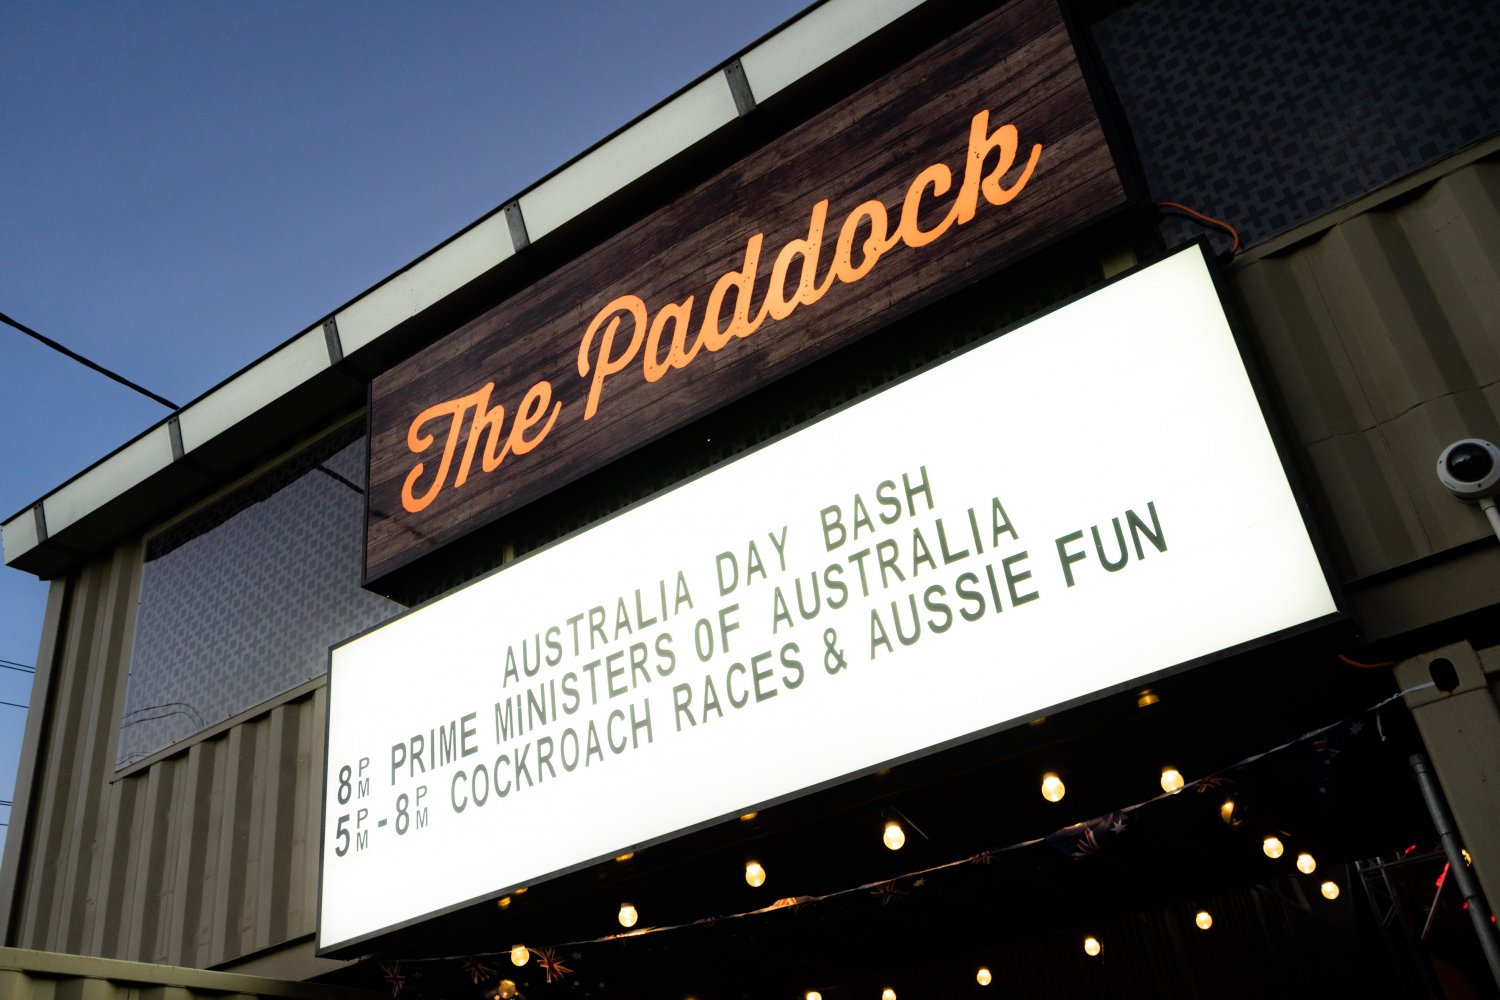 Australia Day Bash at NightQuarter